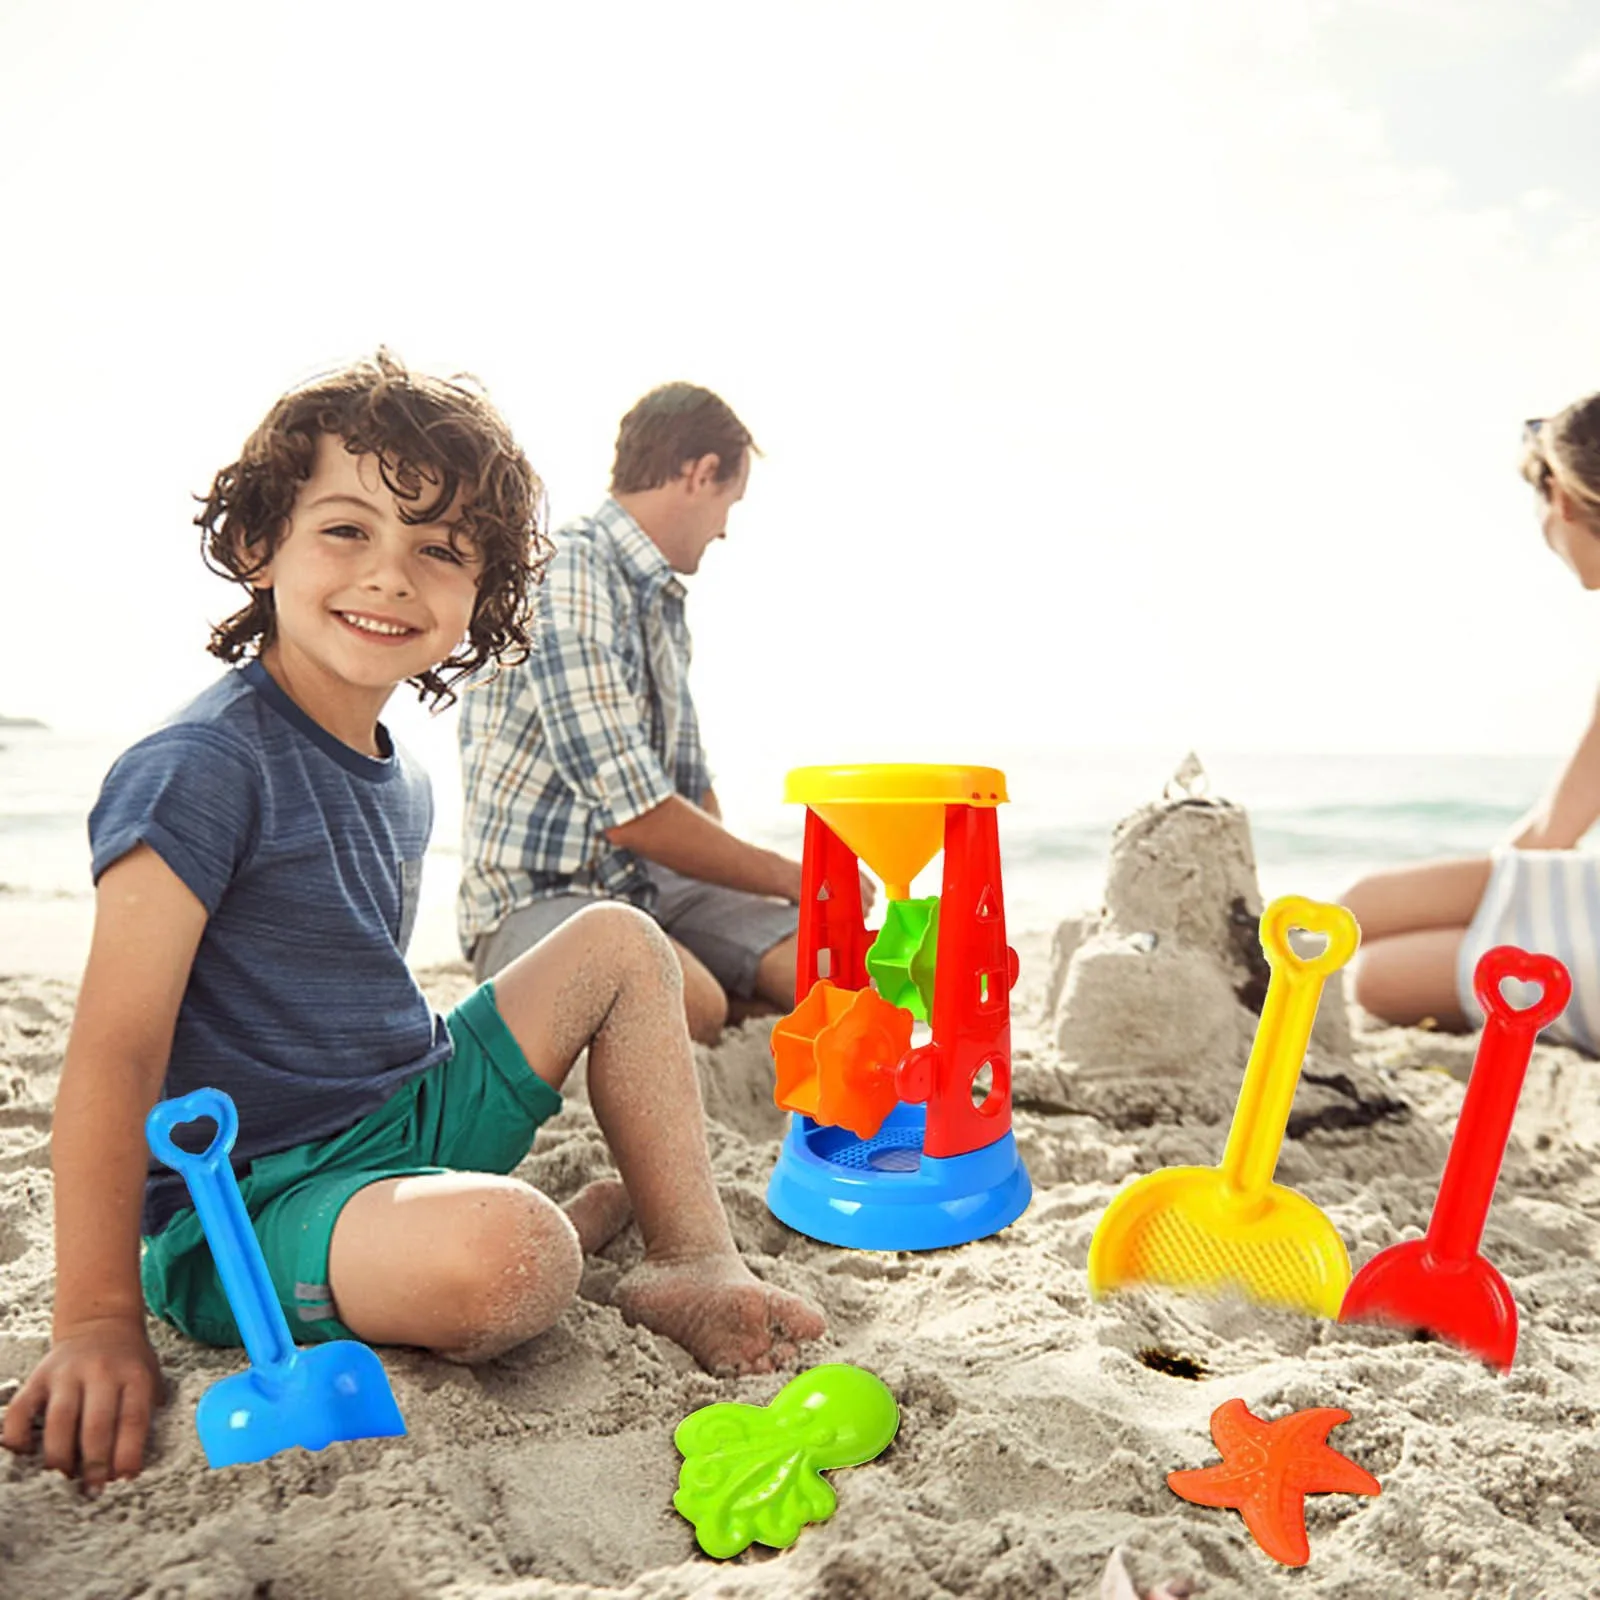 

5-25 Pcs Beach Toys For Kids Play Water Children Sandbox Set Kit Cart Sand Play Sandpit Toy Summer Beach Toy Juguetes Playa #4